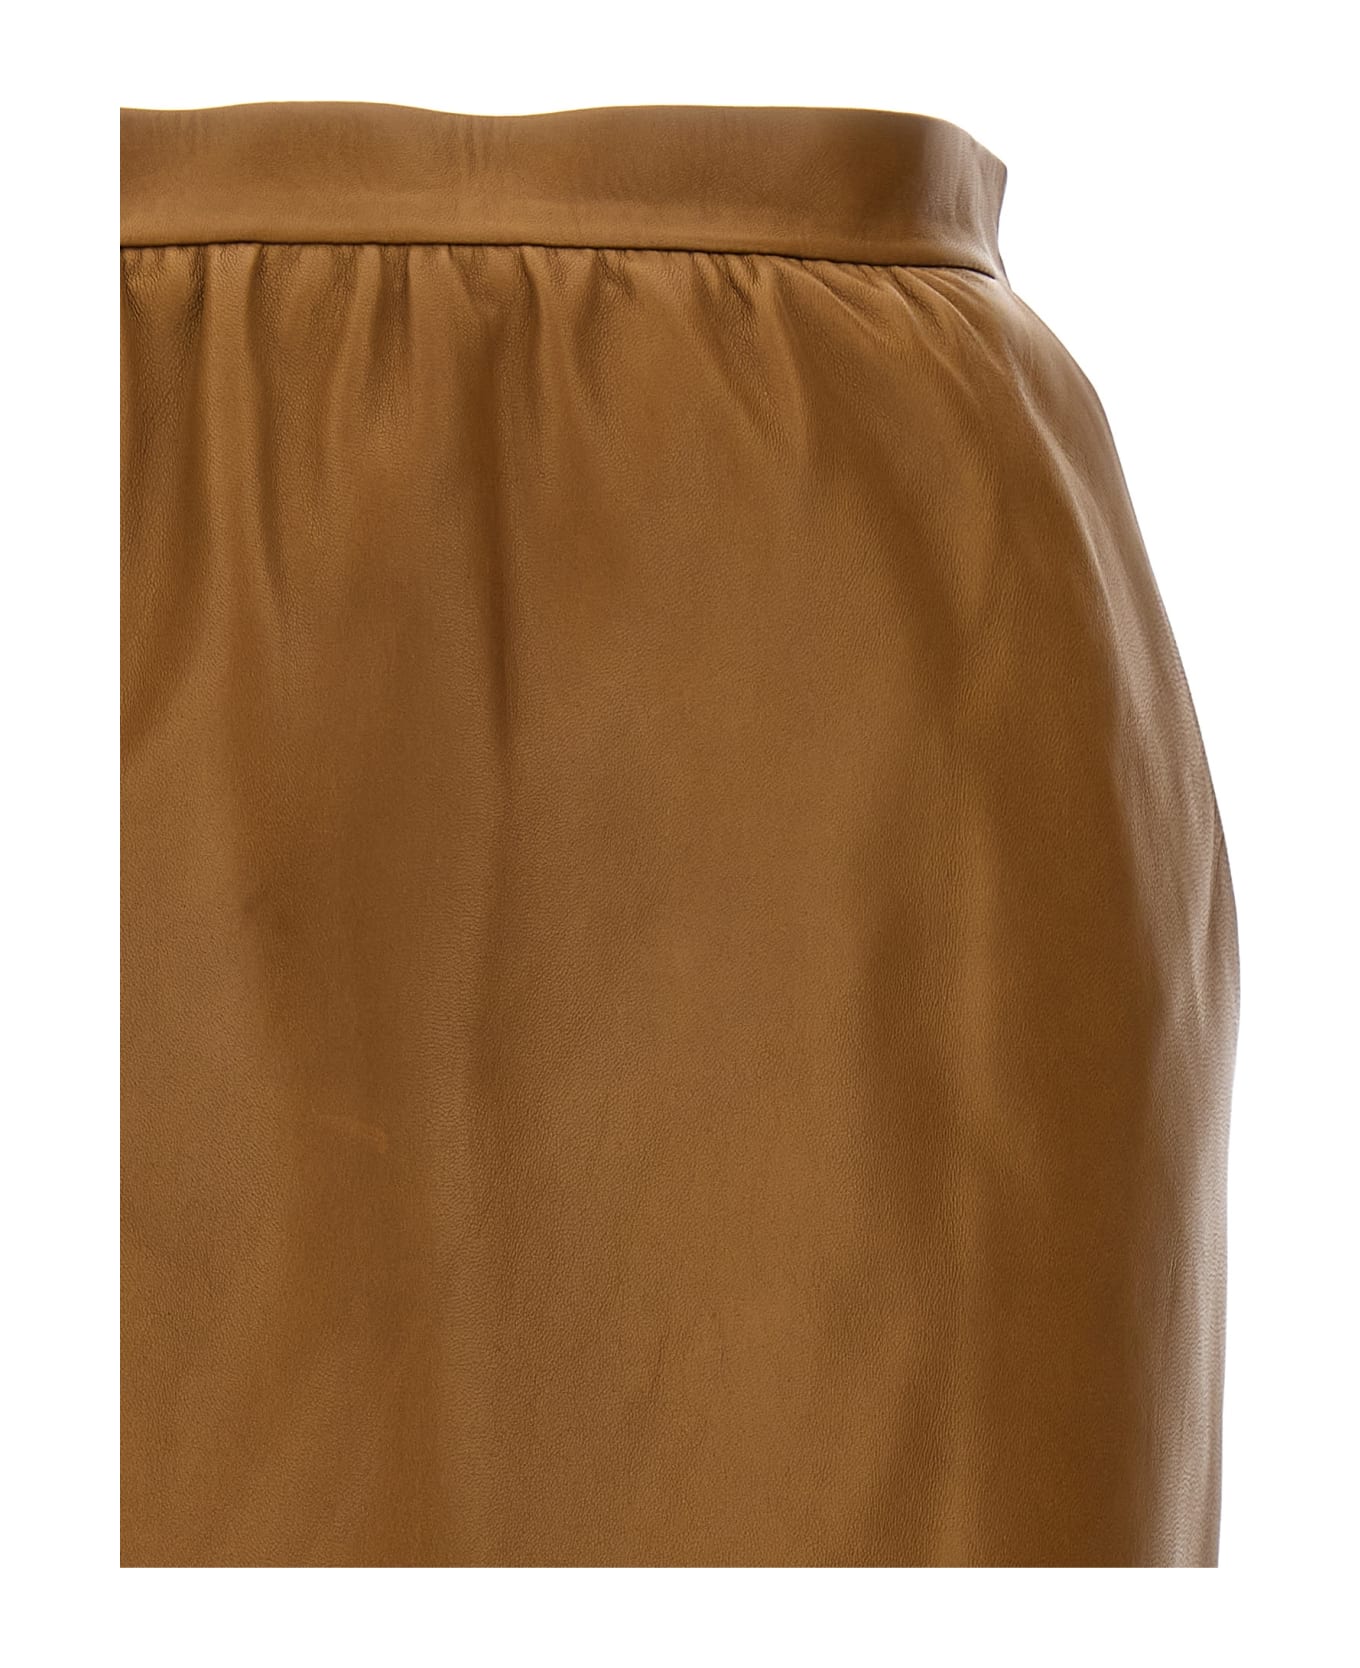 Saint Laurent Leather Skirt - Brown スカート